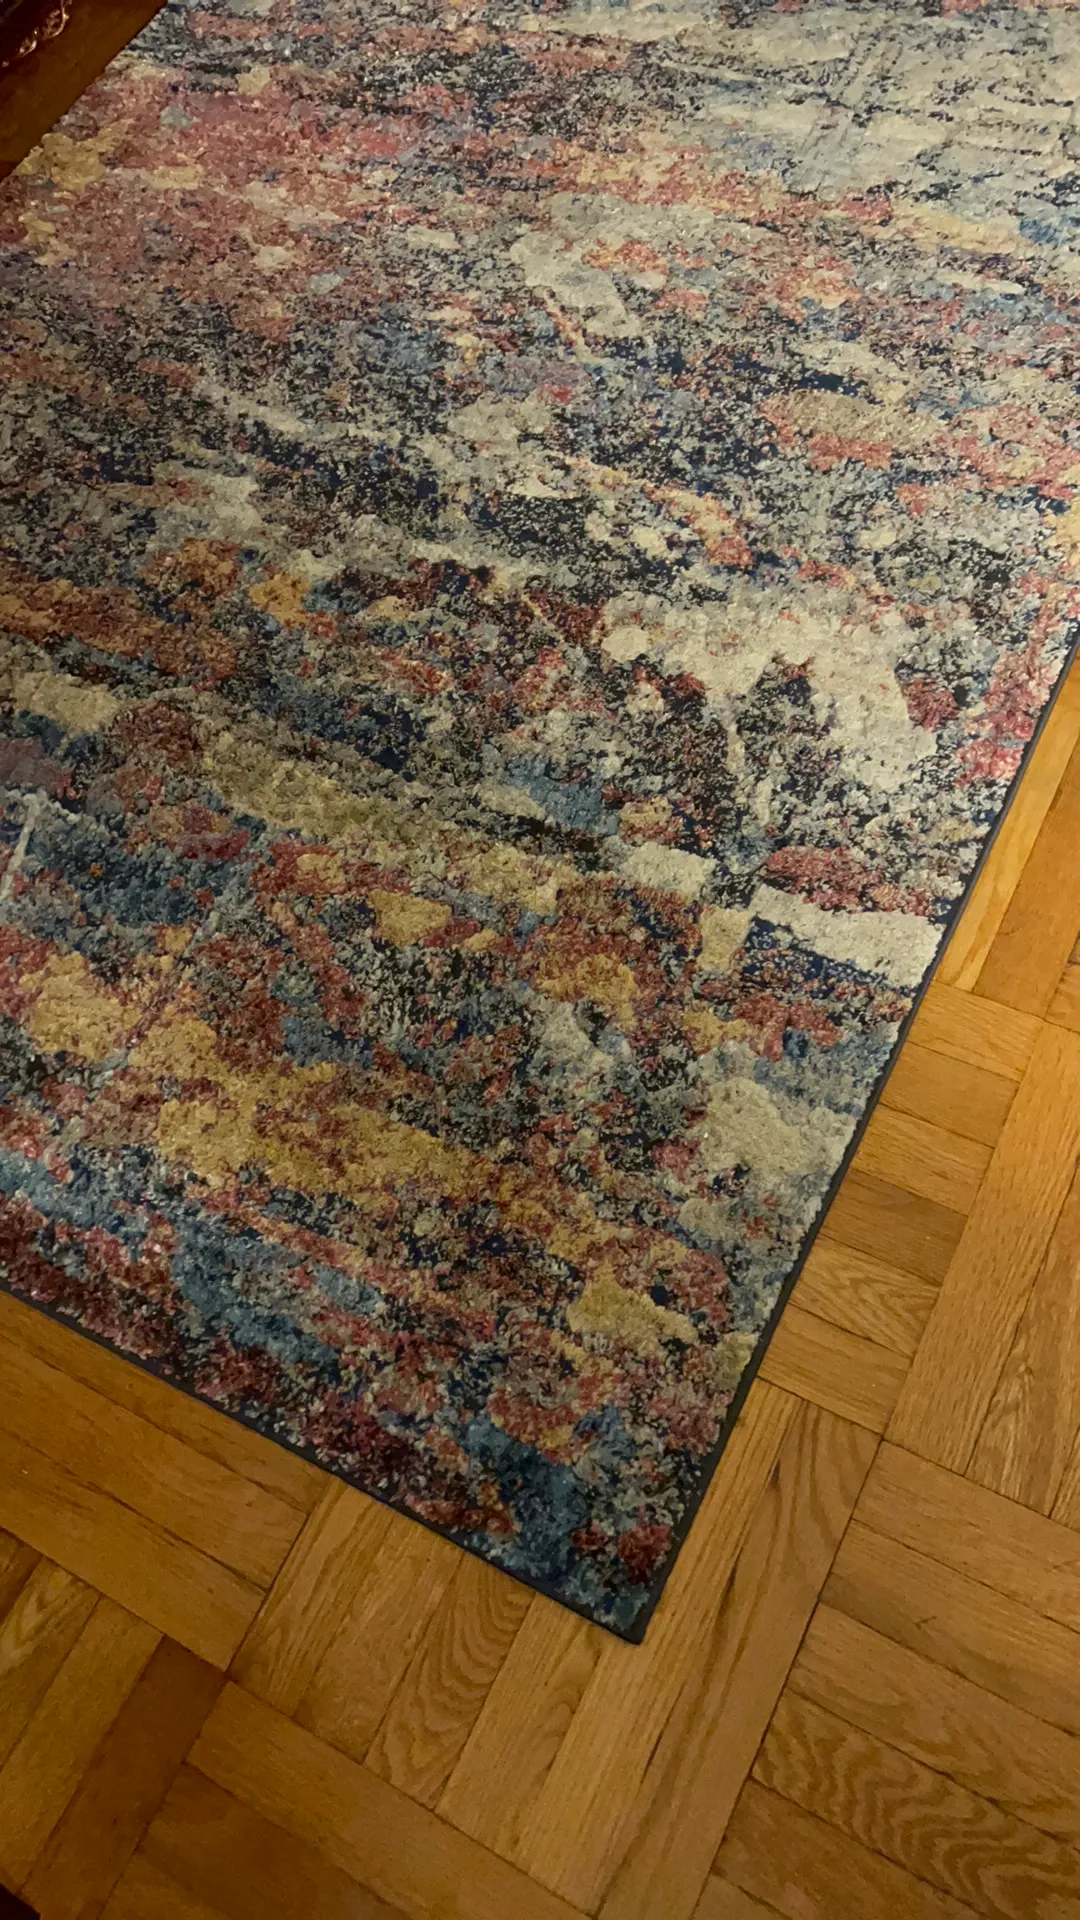 Floor rug / carpets media